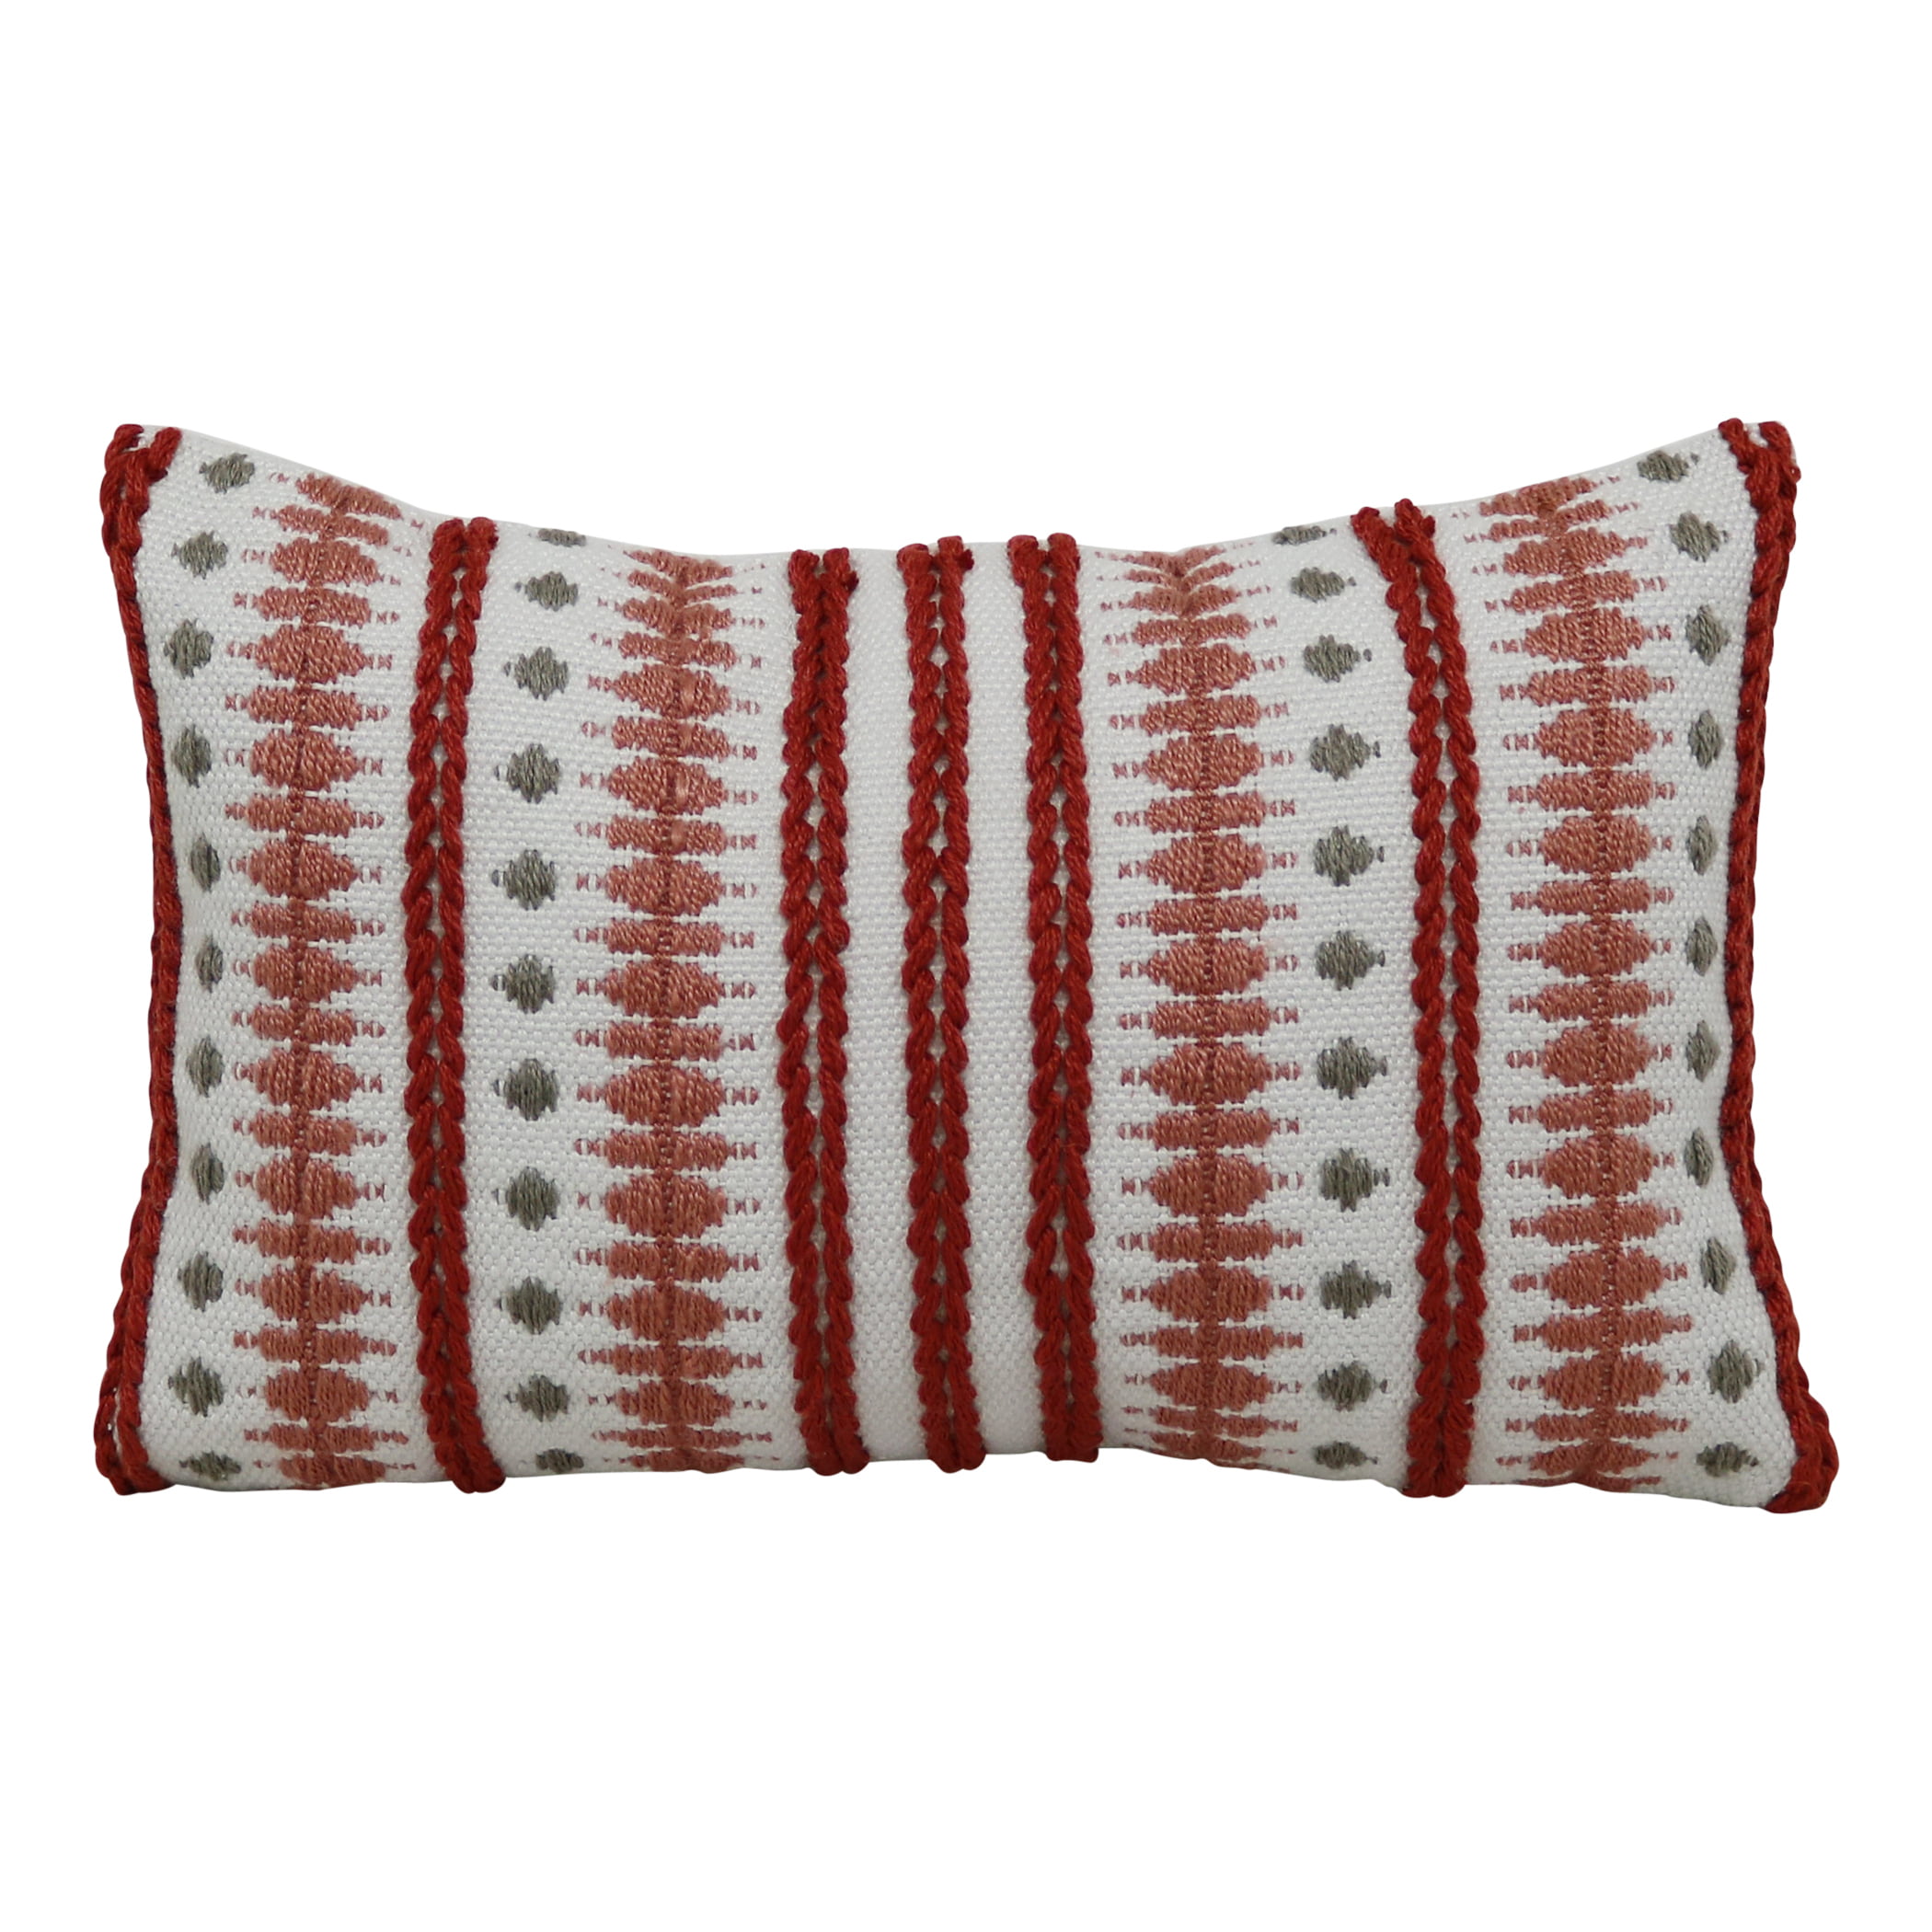 Outdoor Toss Pillow Red Woven, Better Homes And Gardens Outdoor Throw Pillows